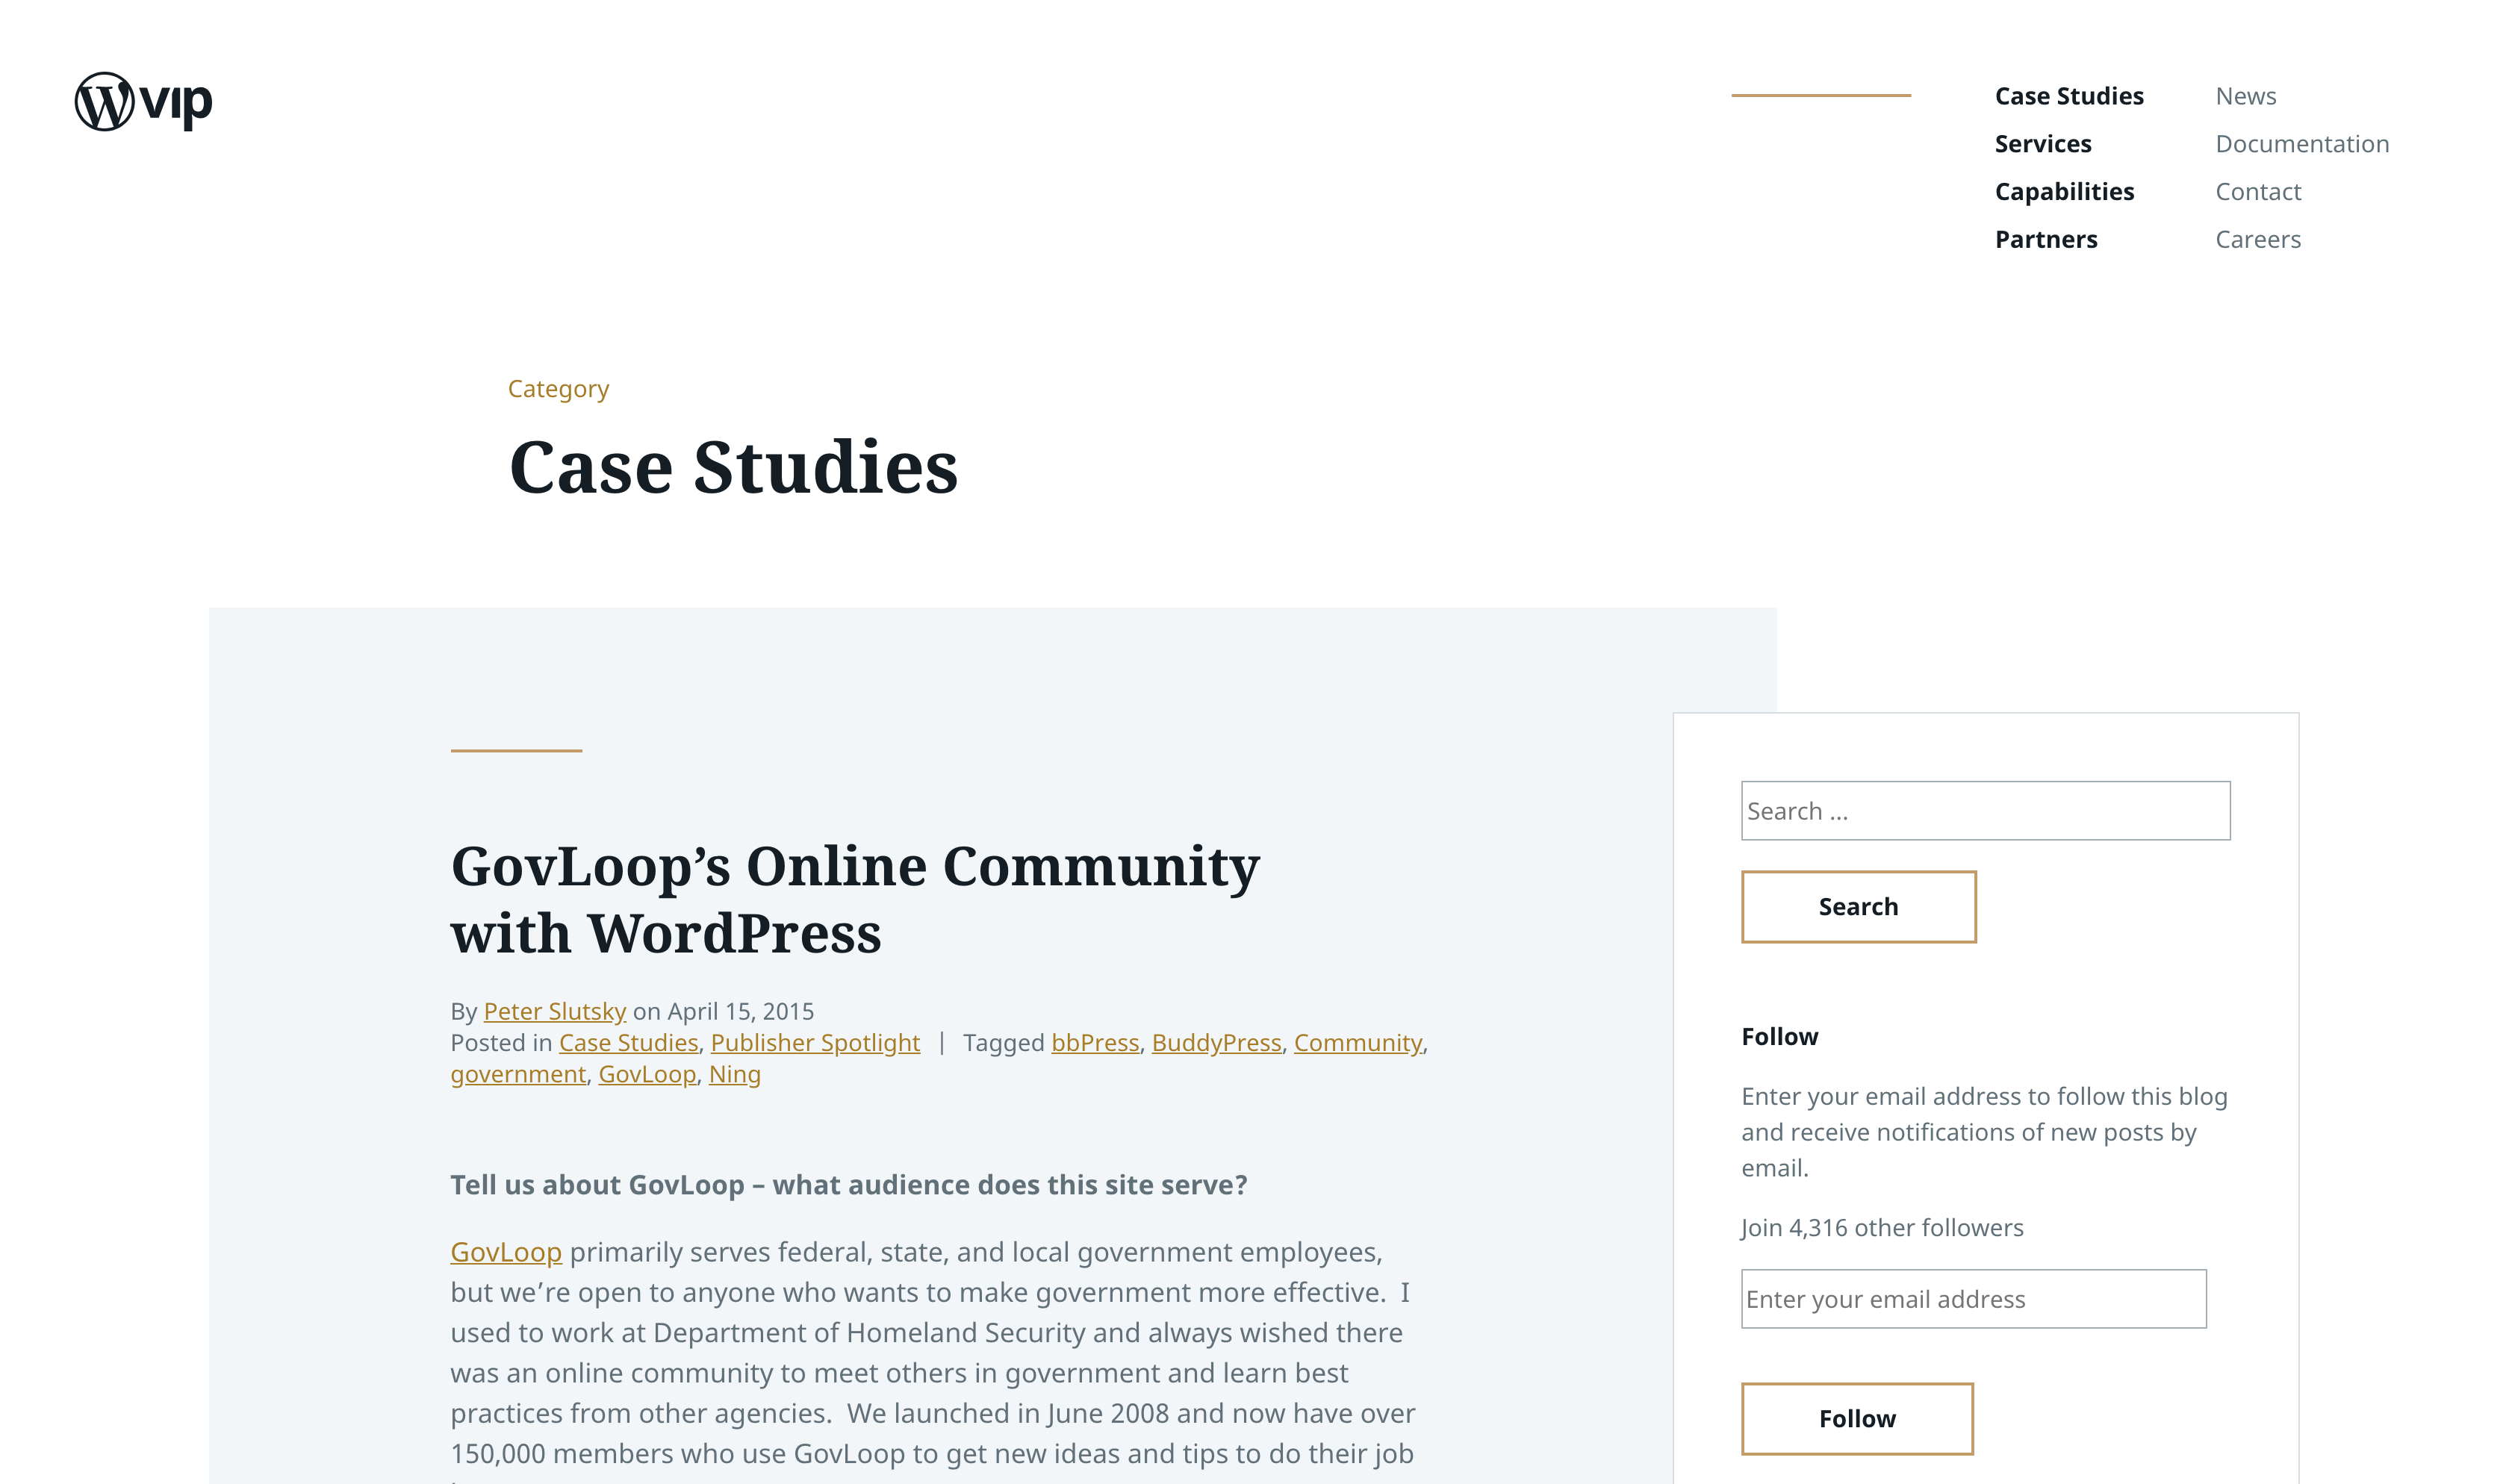 The WordPress.com Case Studies page.